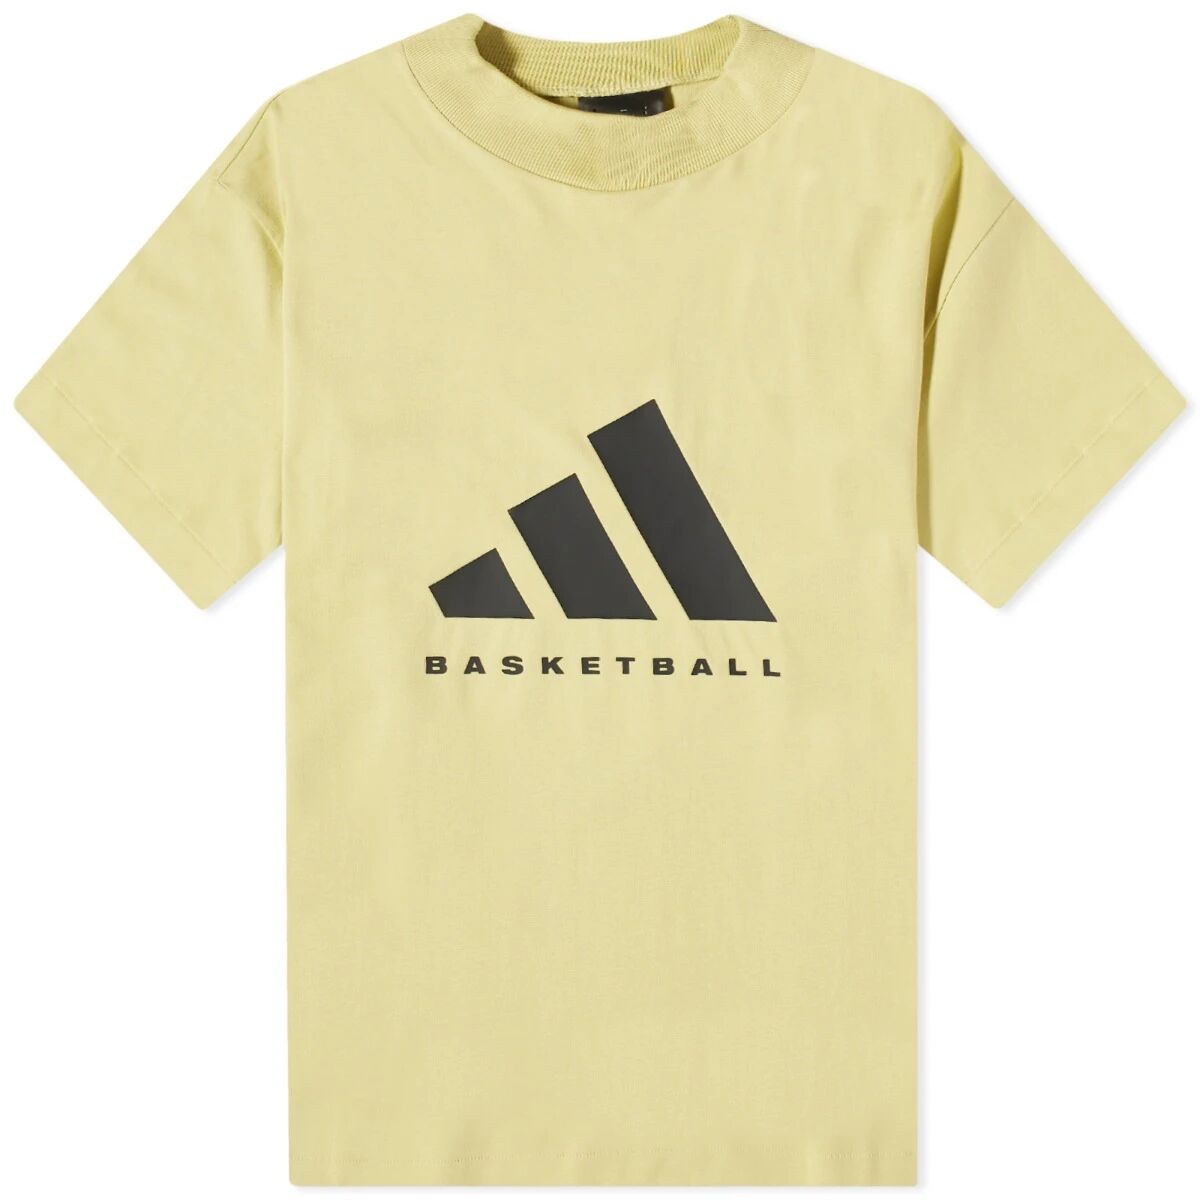 Adidas Basketball Logo T-Shirt in Halo Gold, Size X-Large